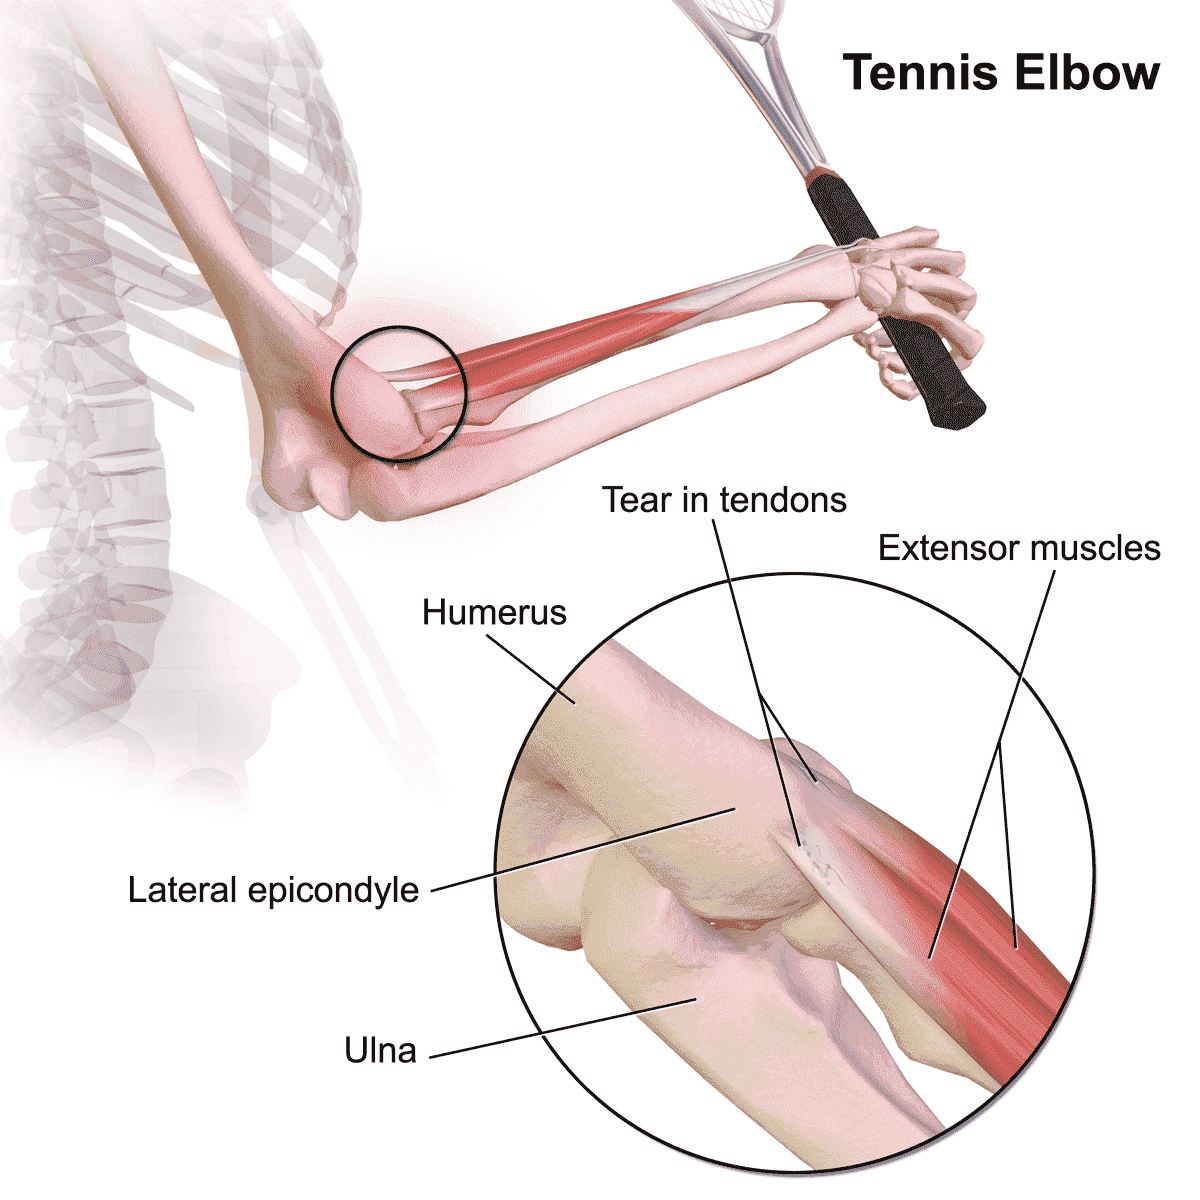 Tennis Elbow Explained